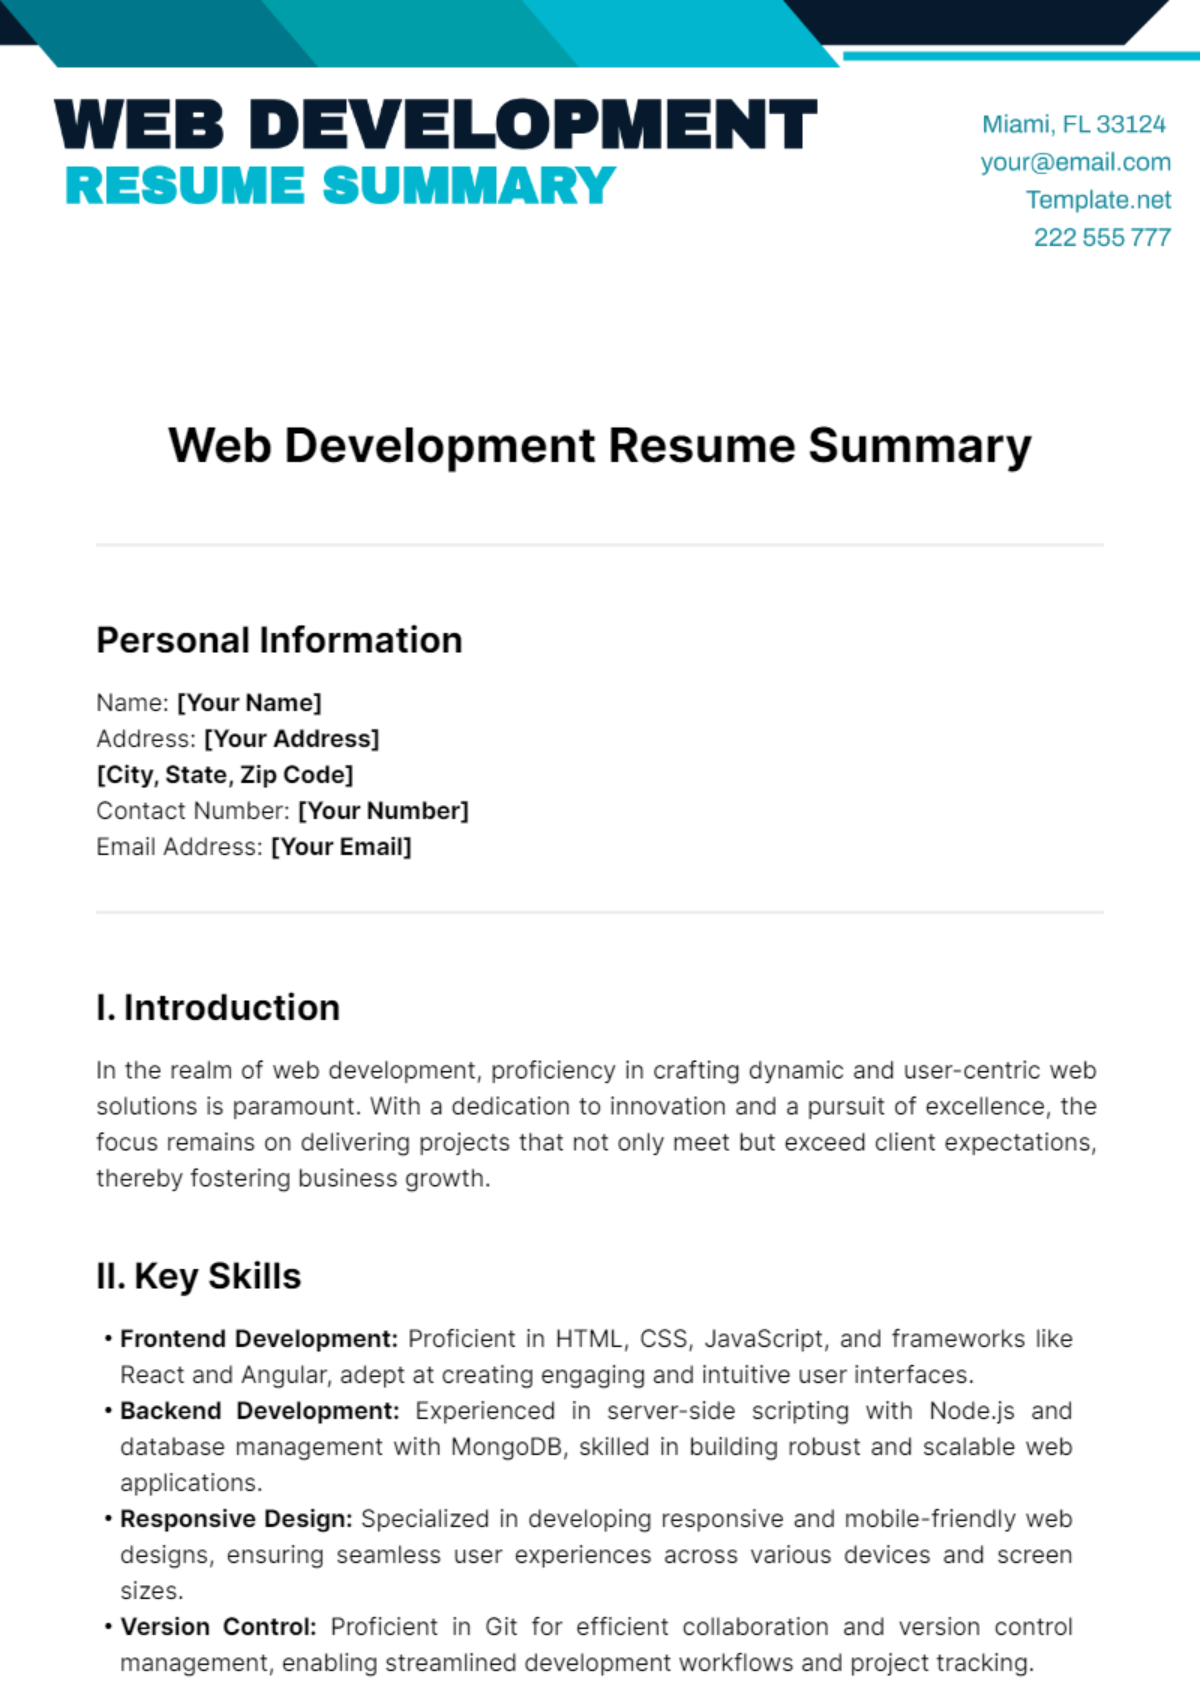 Free Web Development Resume Summary Template